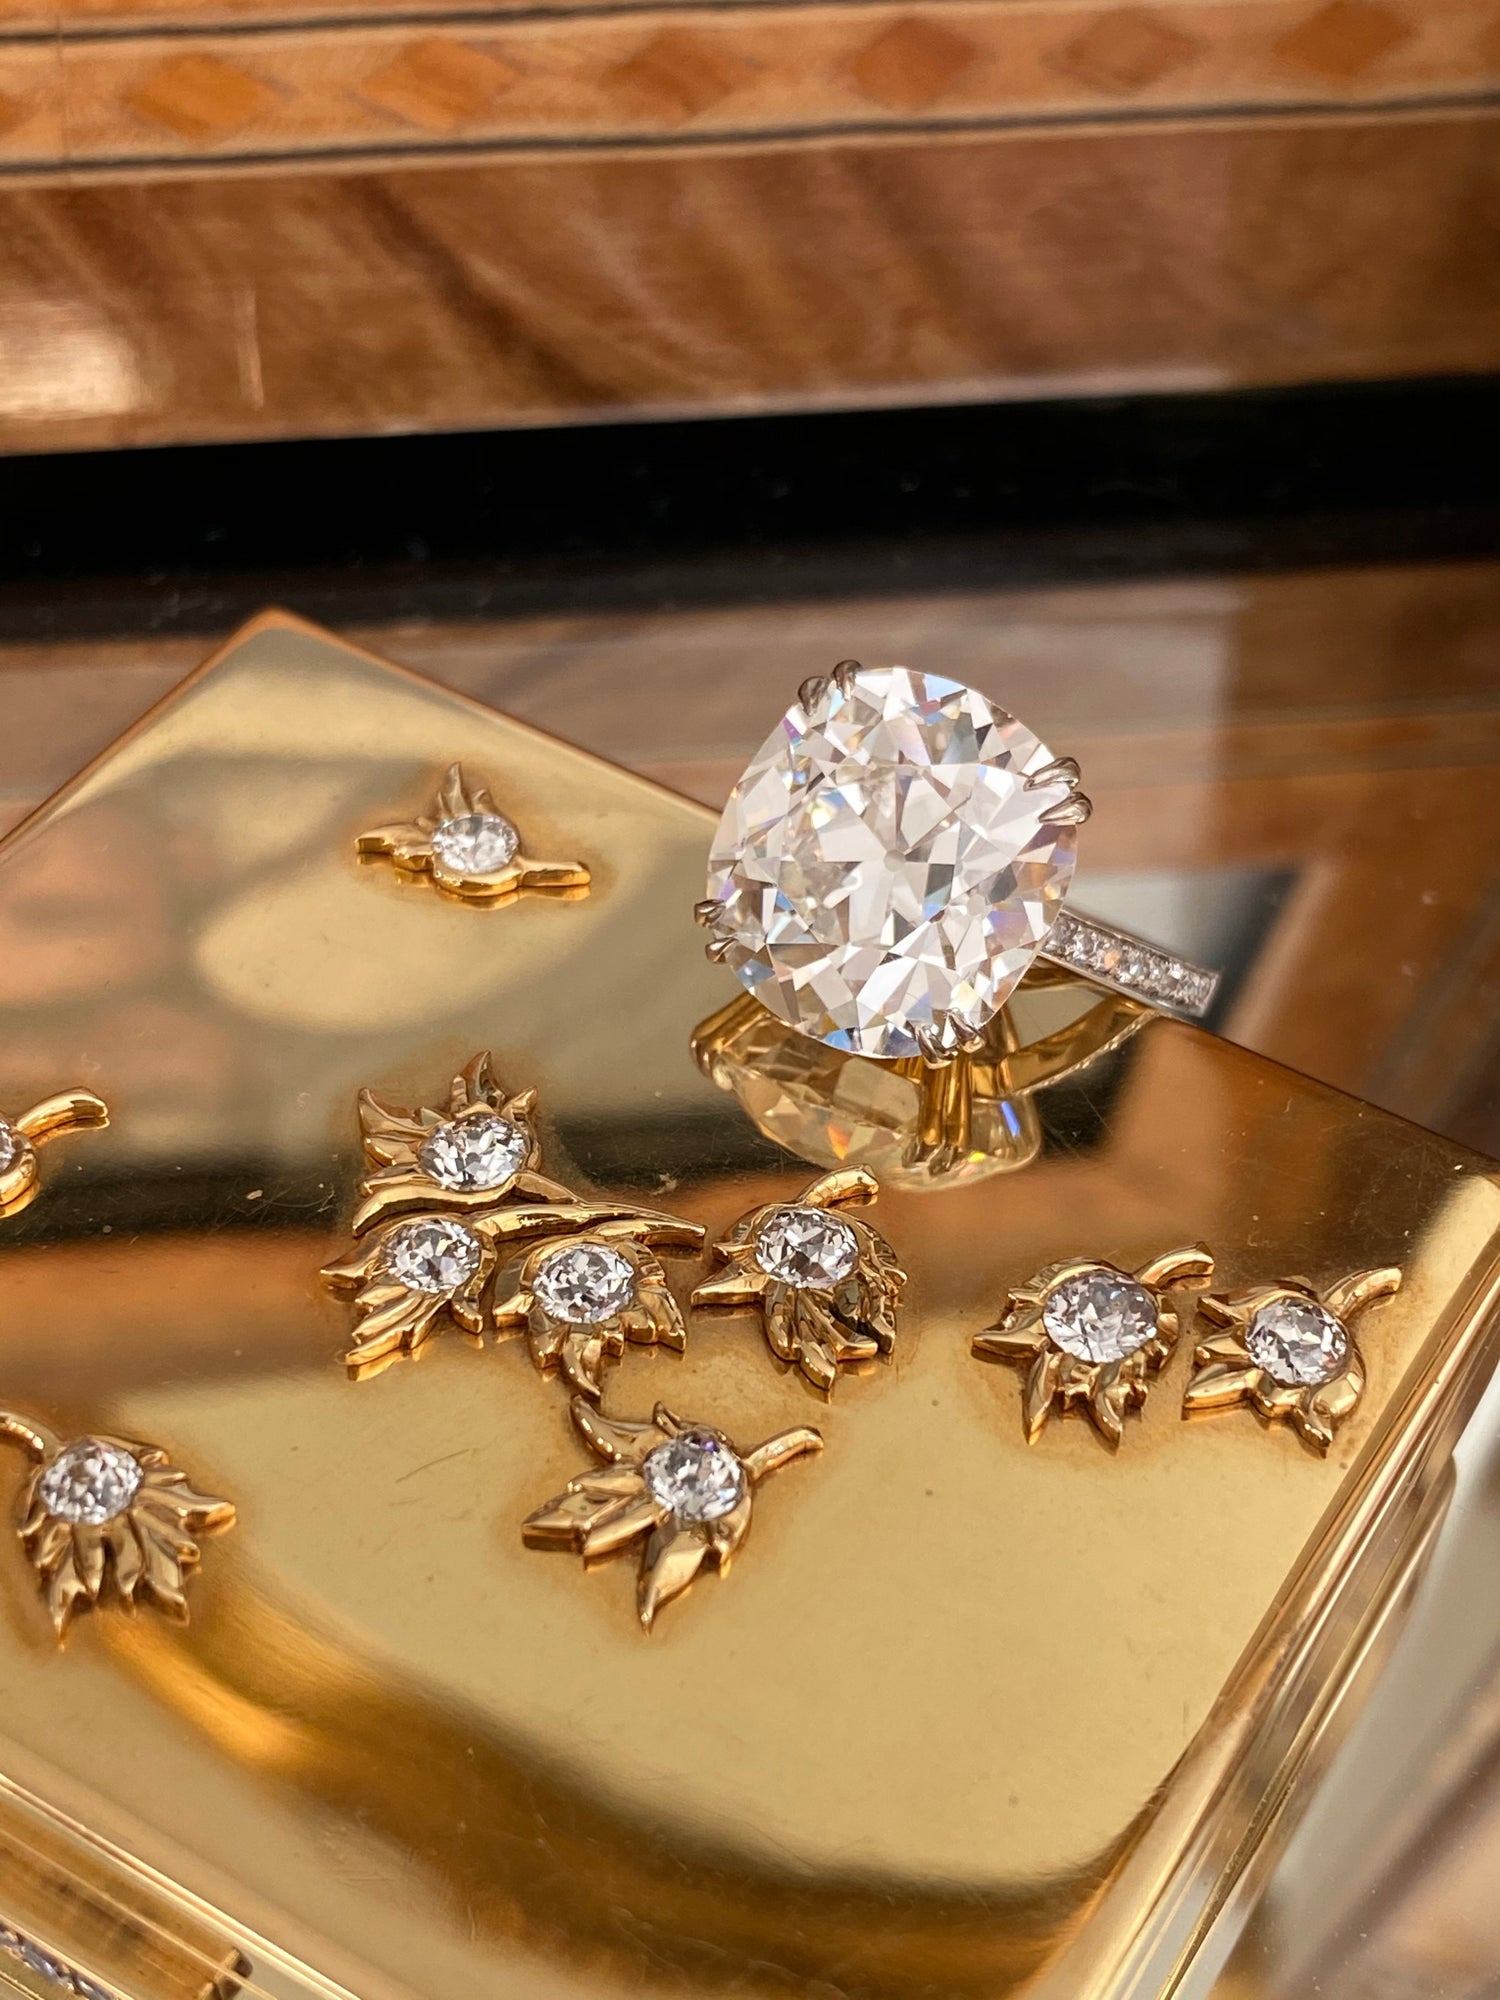 11 carat old mine diamond estate ring with rose cut diamond setting.